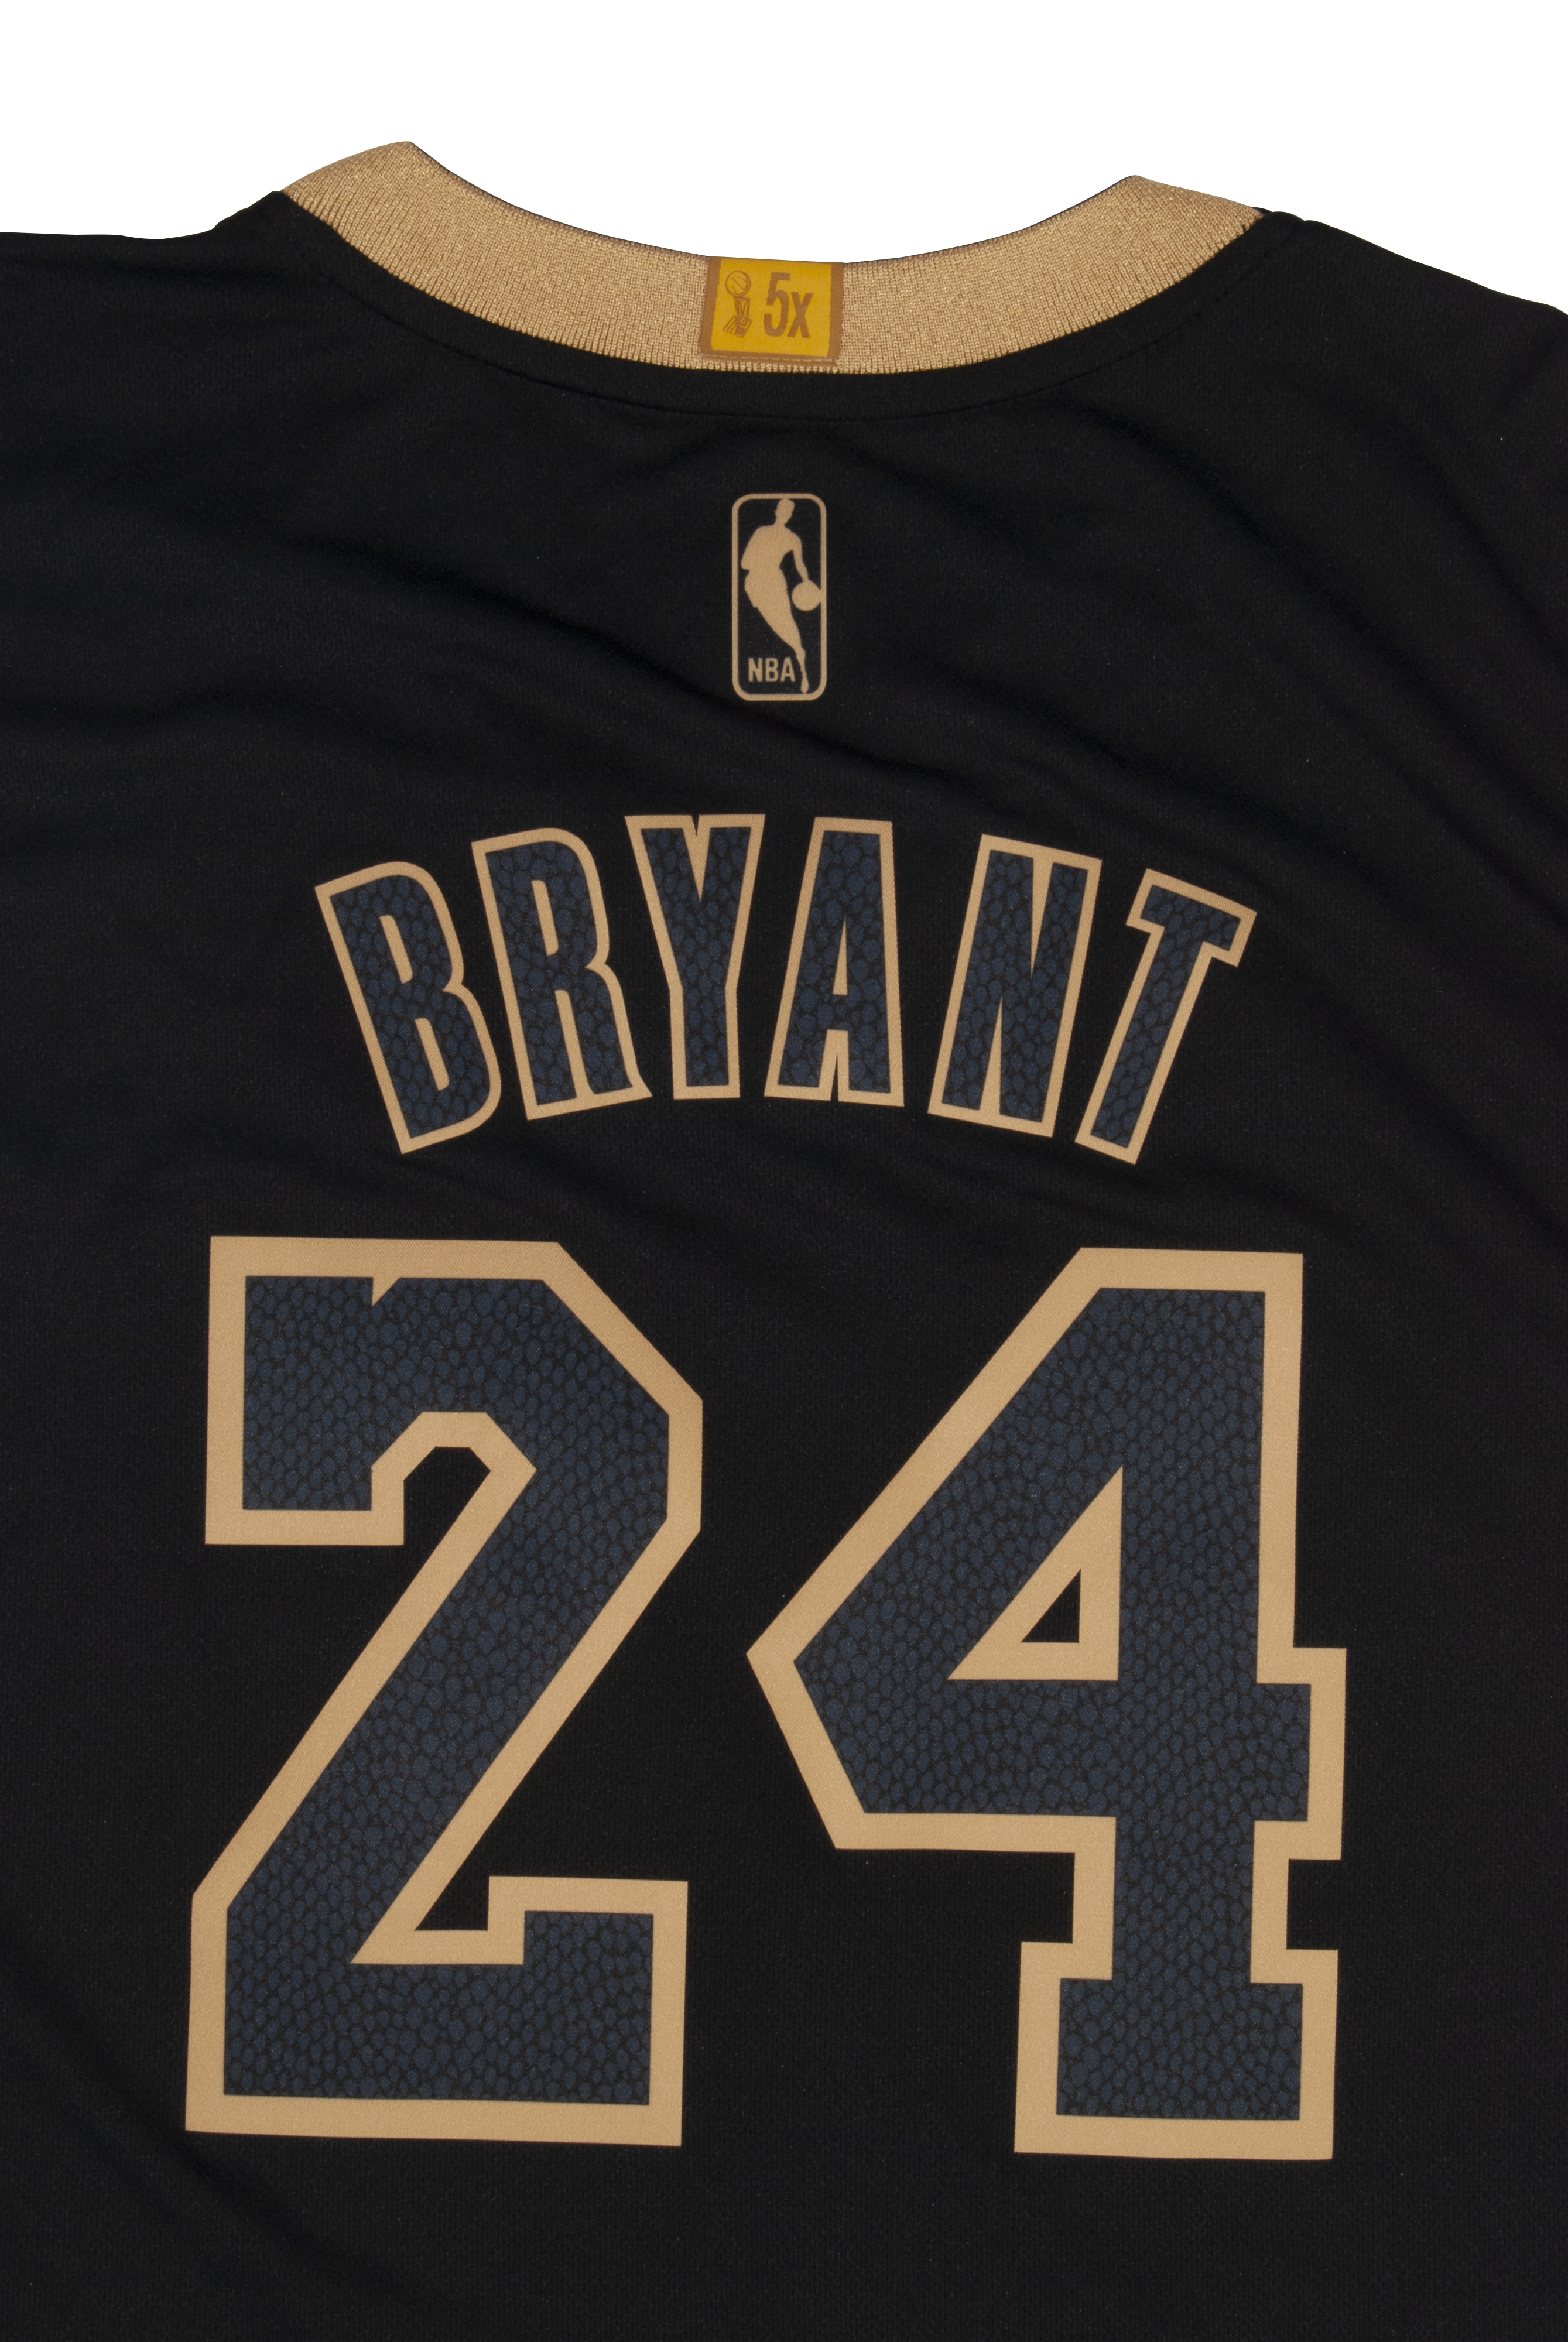 Kobe Bryant Los Angeles Lakers Commemorative Retirement Jersey